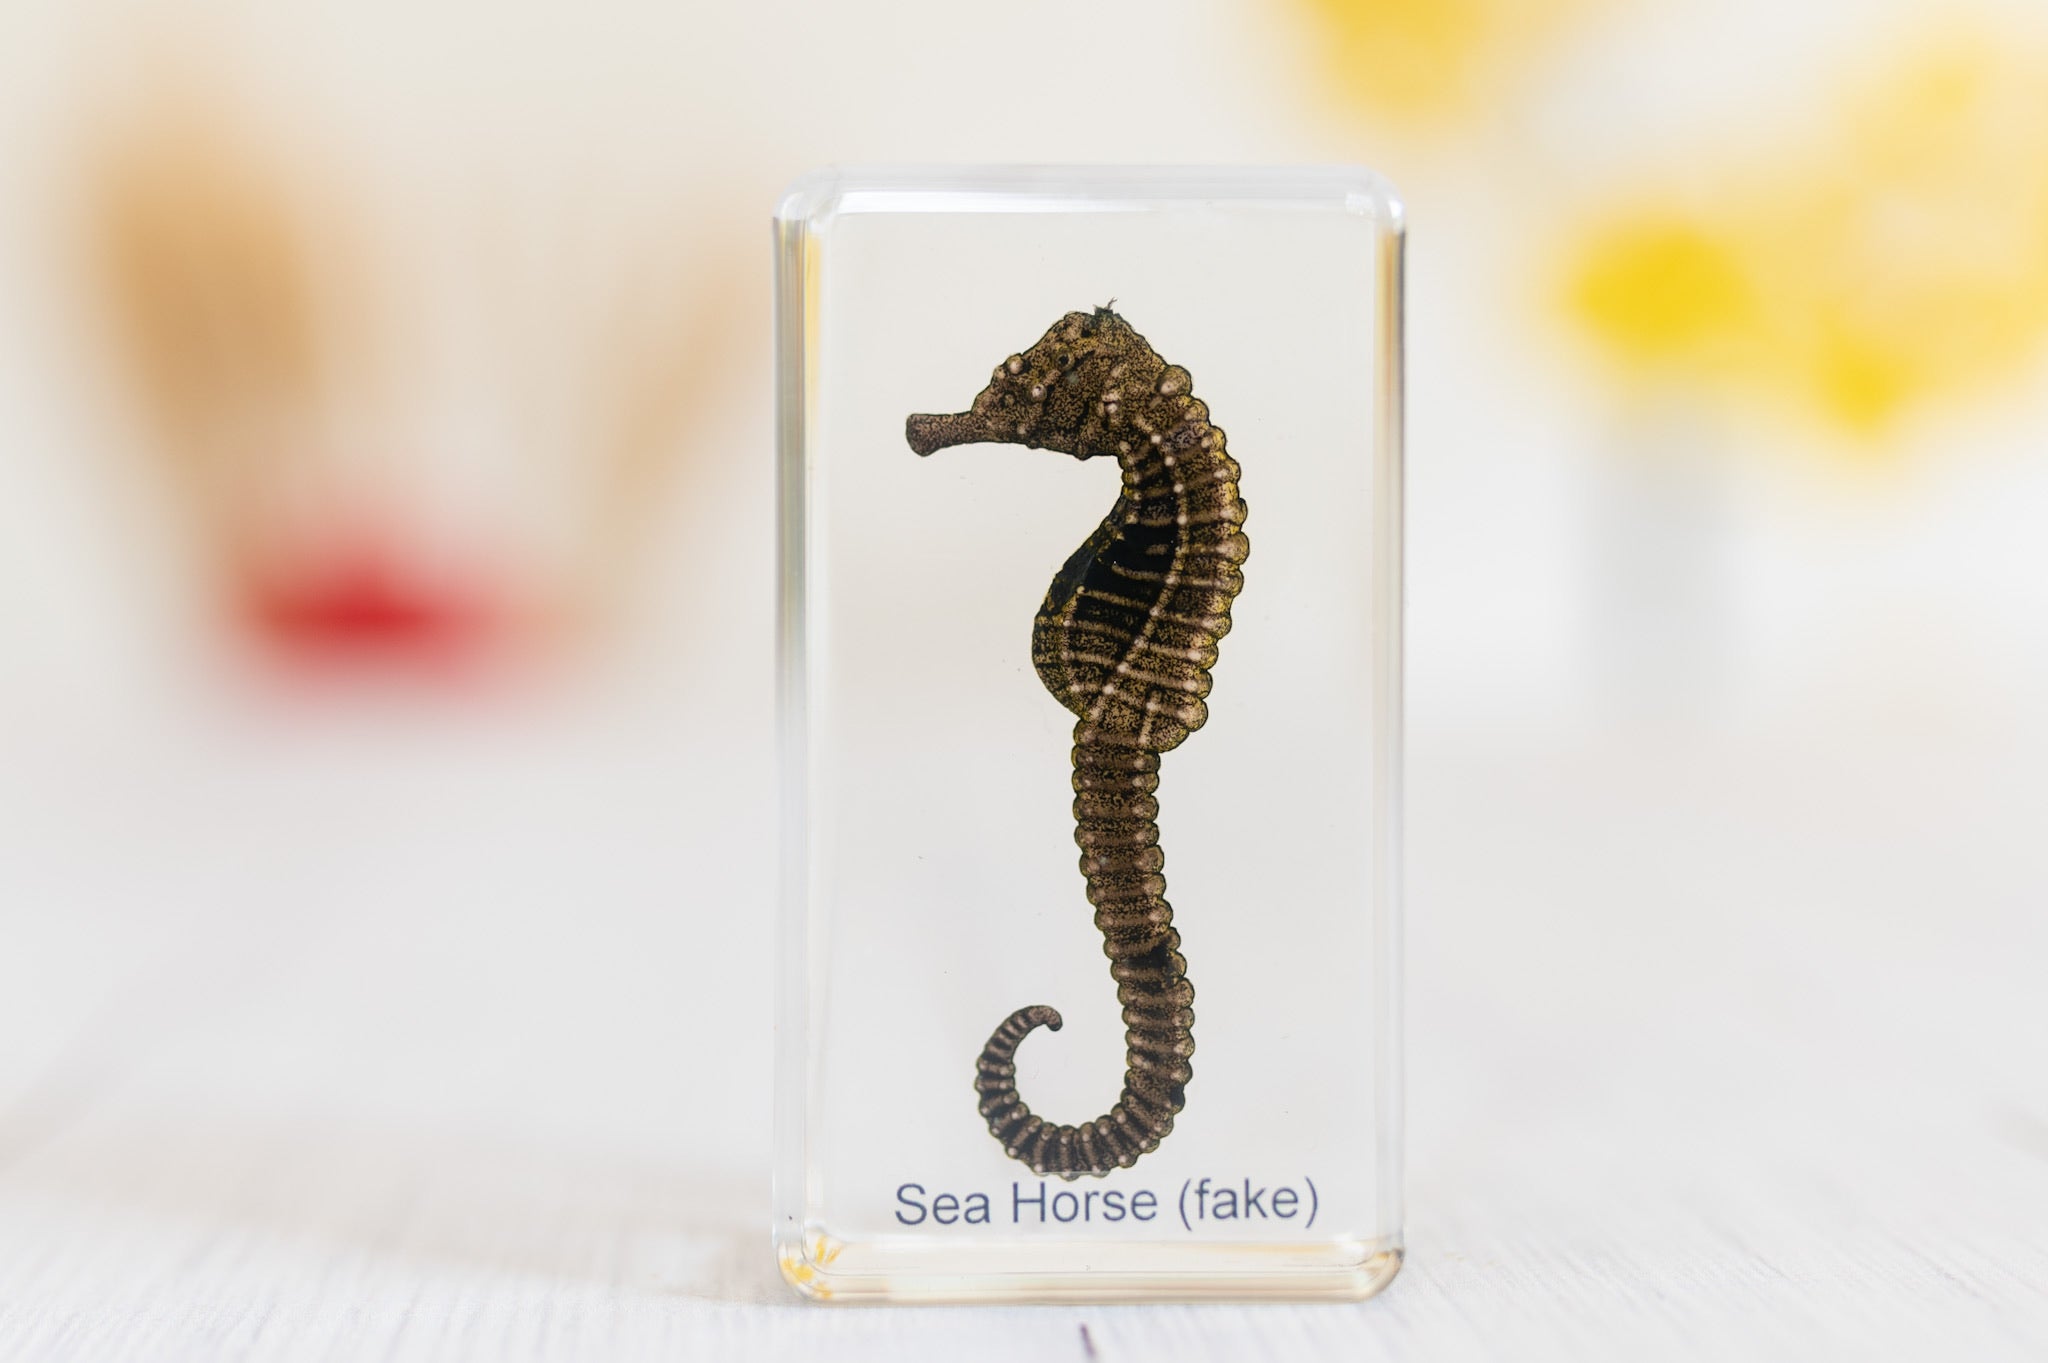 Sea Horse (fake) Specimen (Free Shipping)